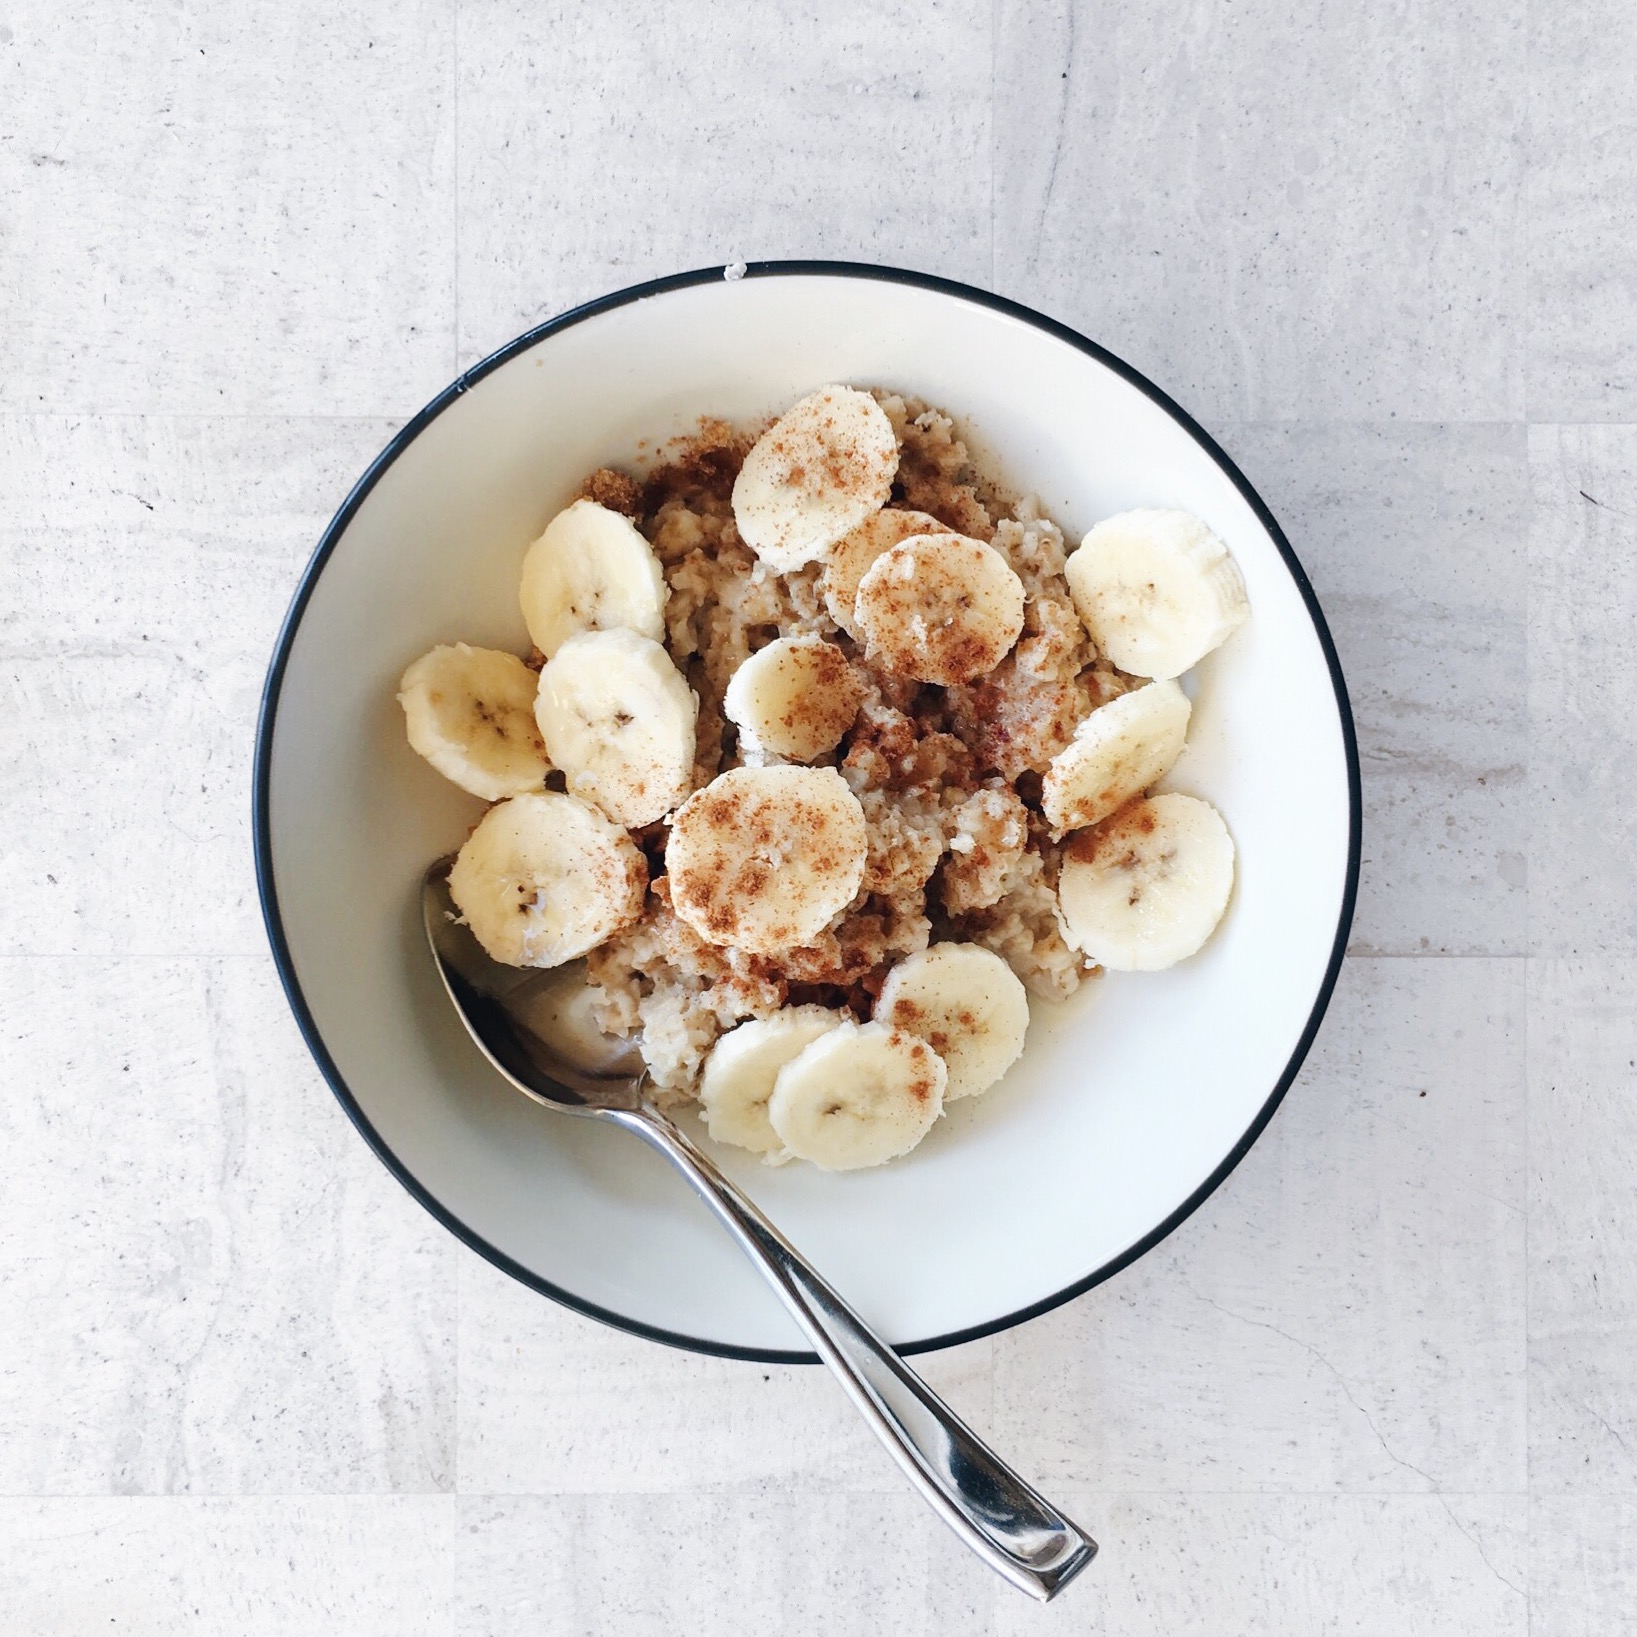 healthy breakfast, reach your fitness goals